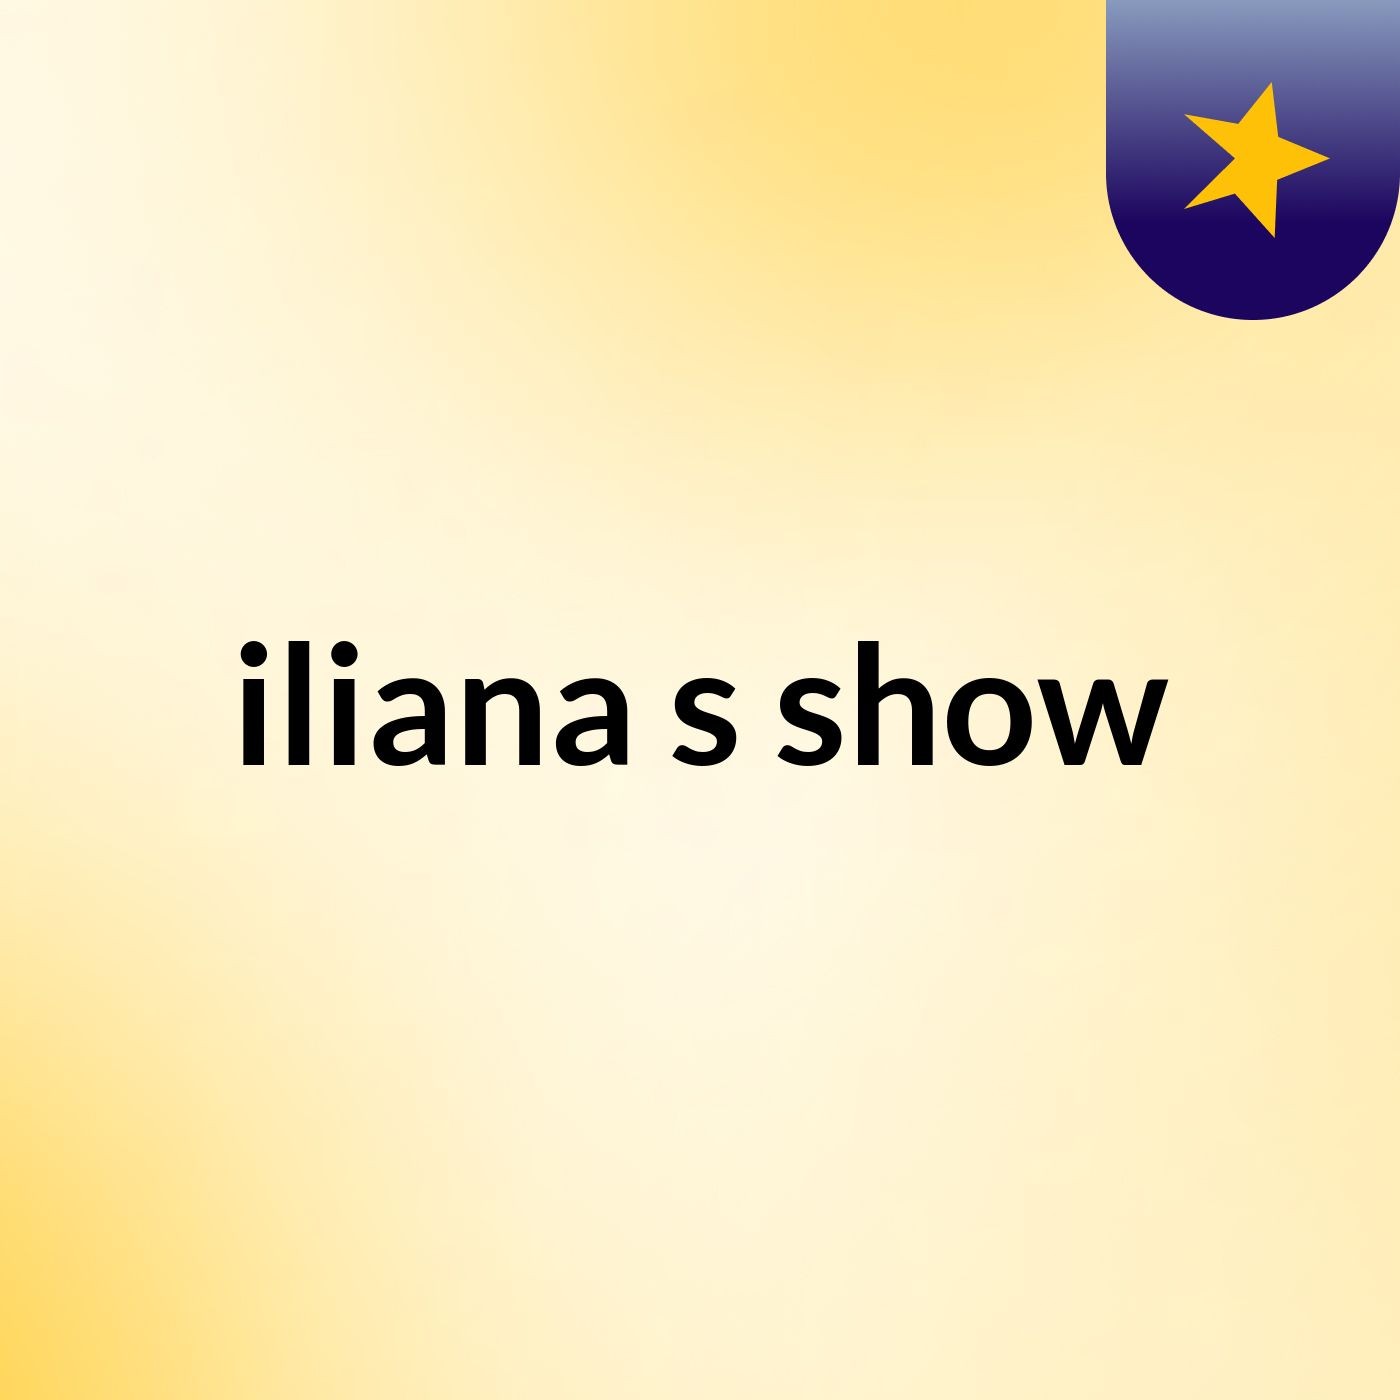 iliana's show